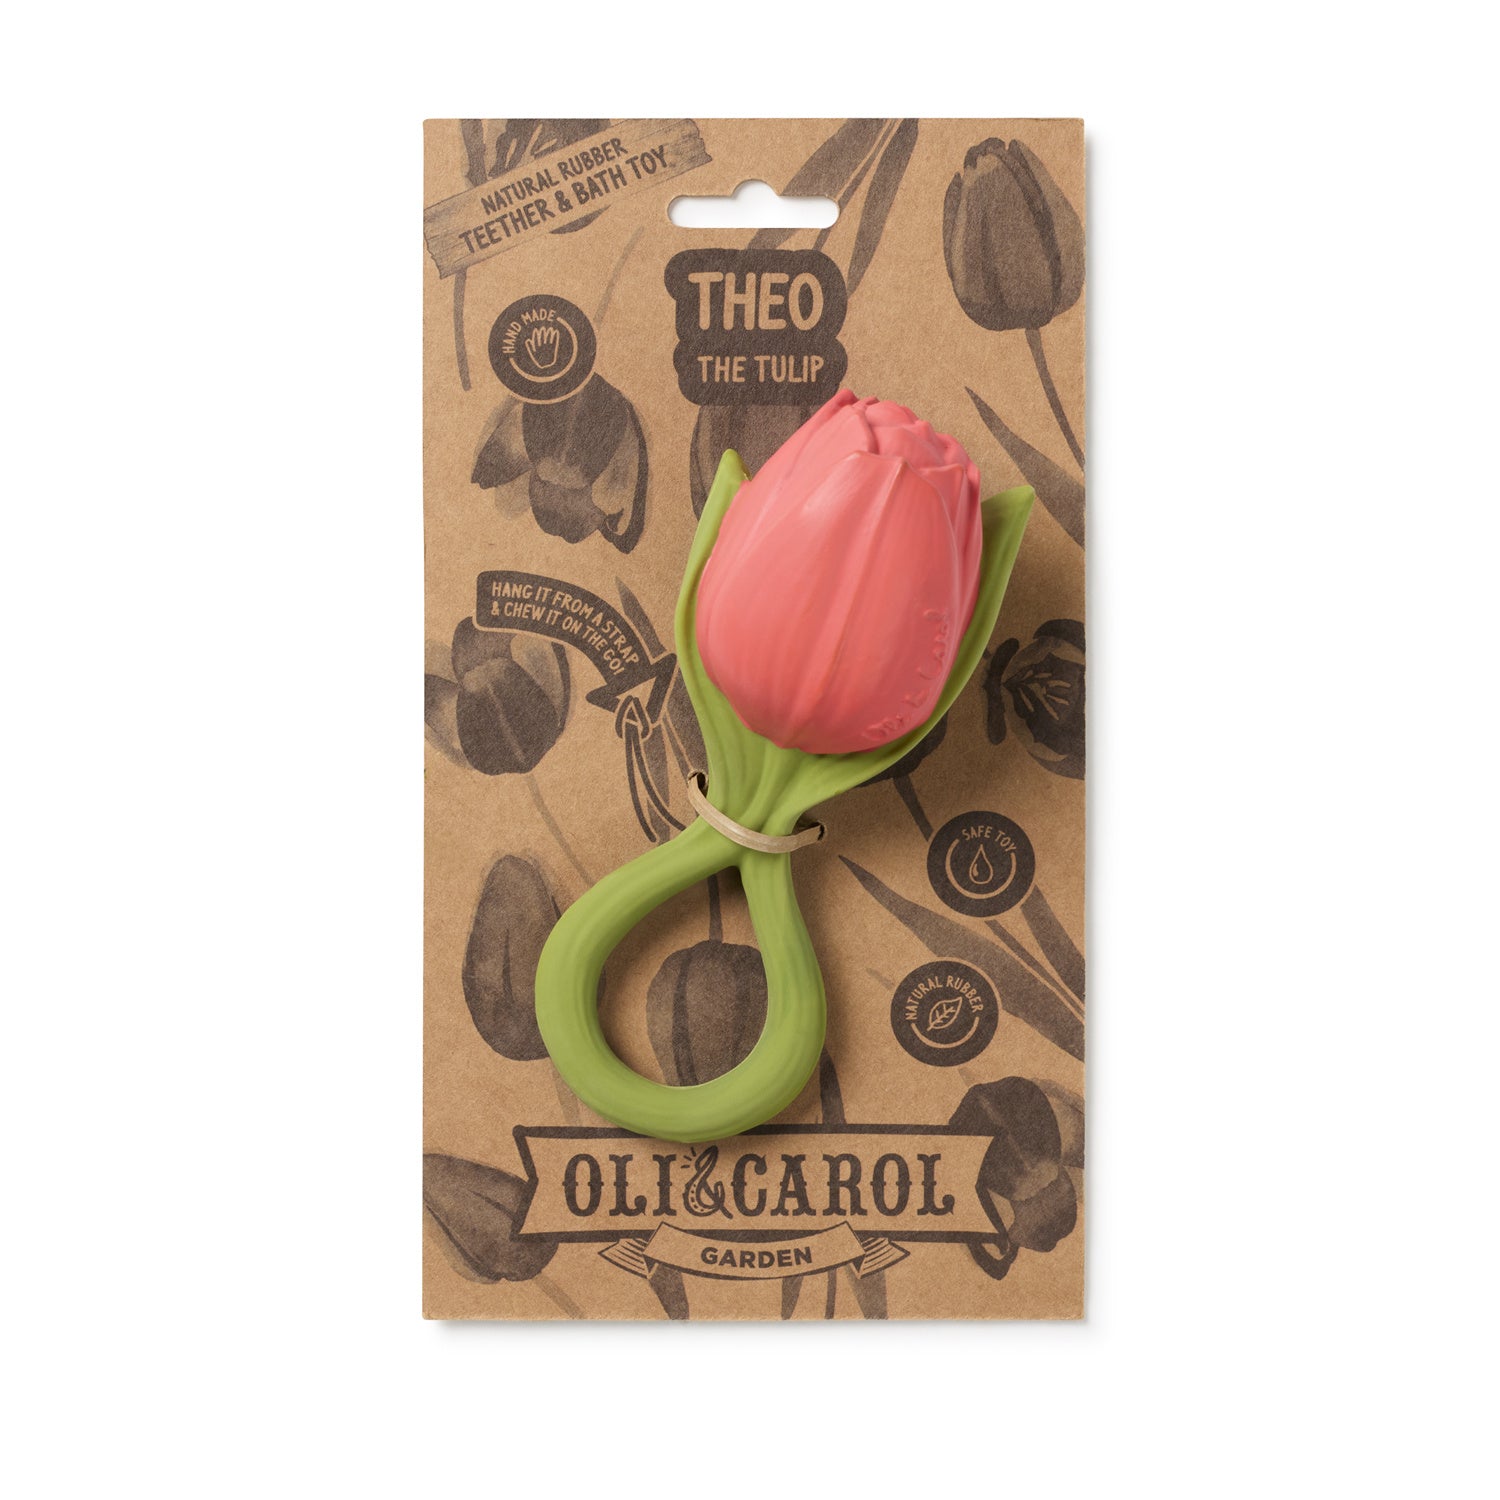 oli en carol, tulp, theo the tulip, bijtspeeltje